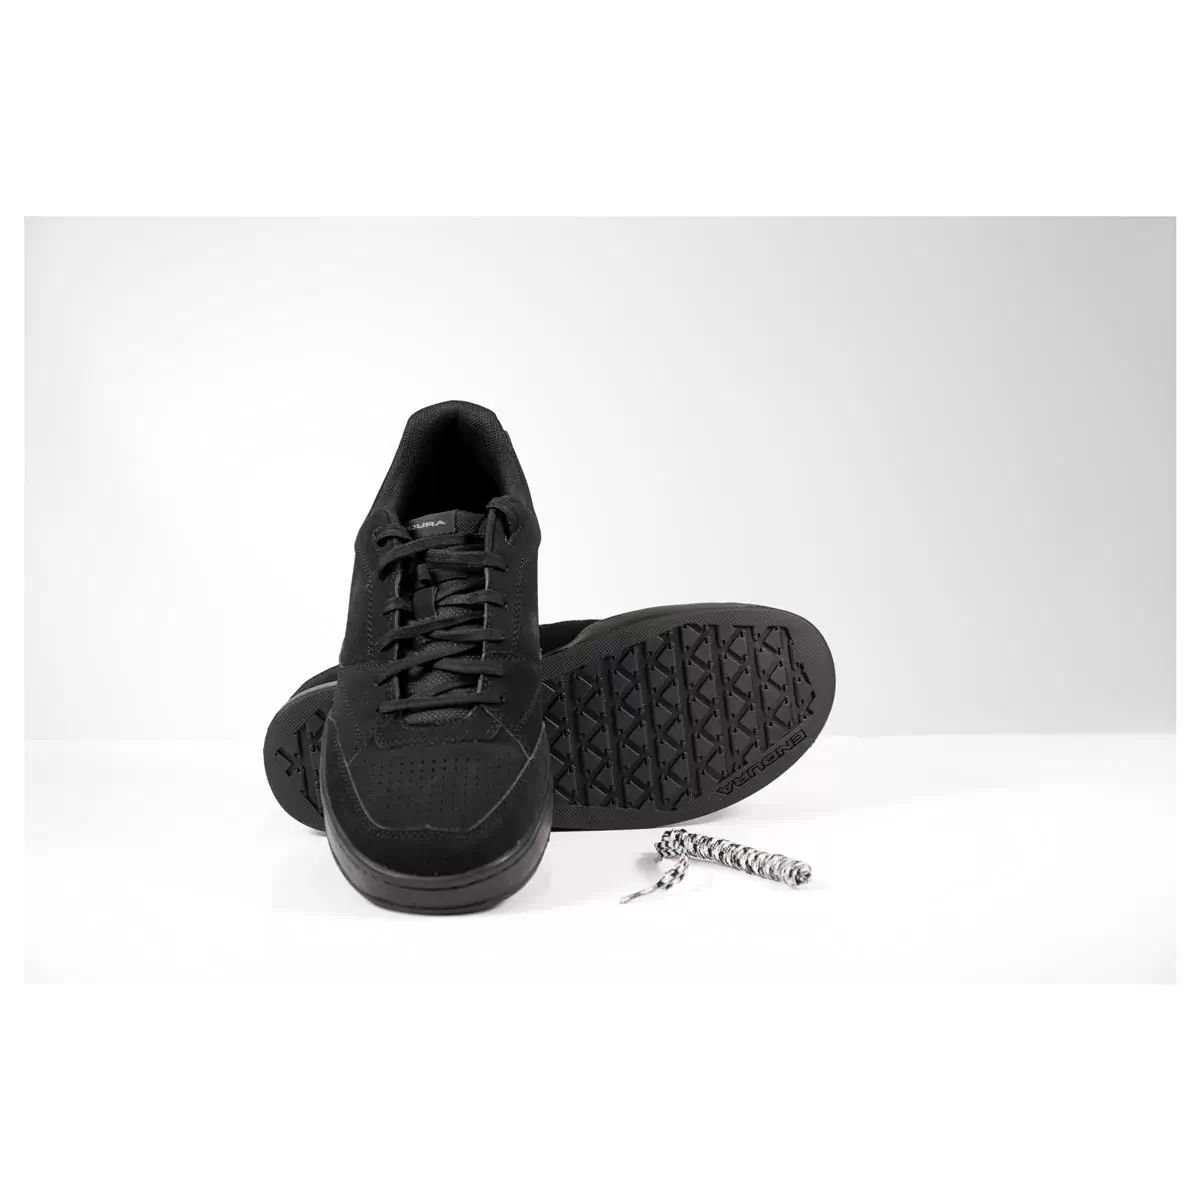 Hummvee Flat Pedal Shoes Black Size 44 #3